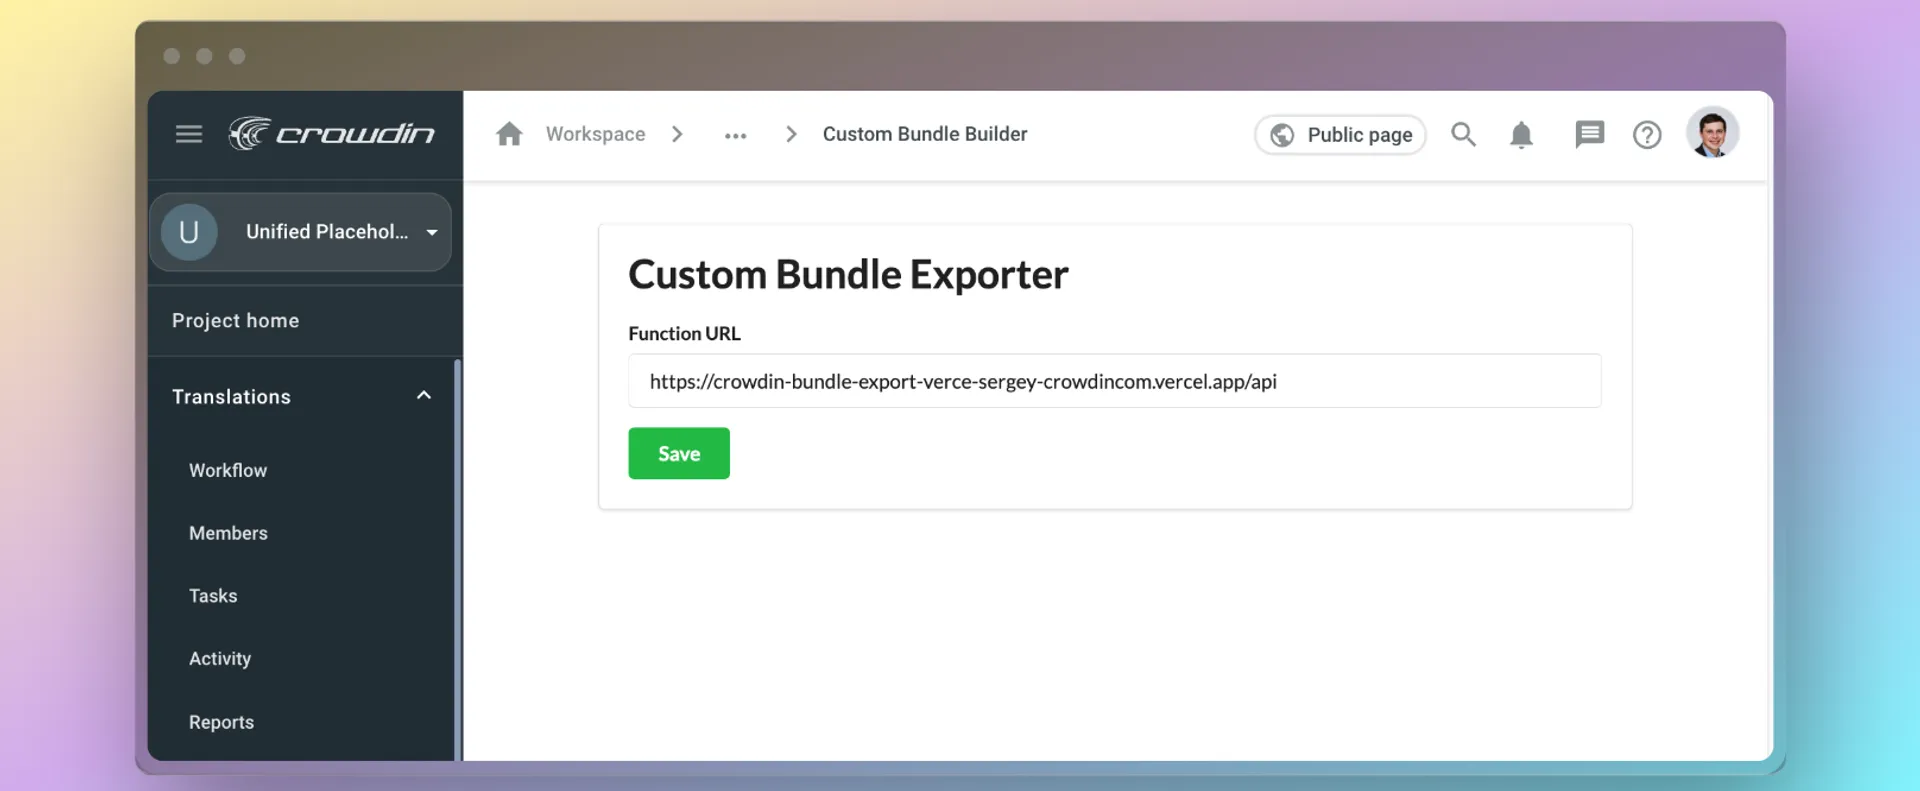 Crowdin Custom Bundle Exporter